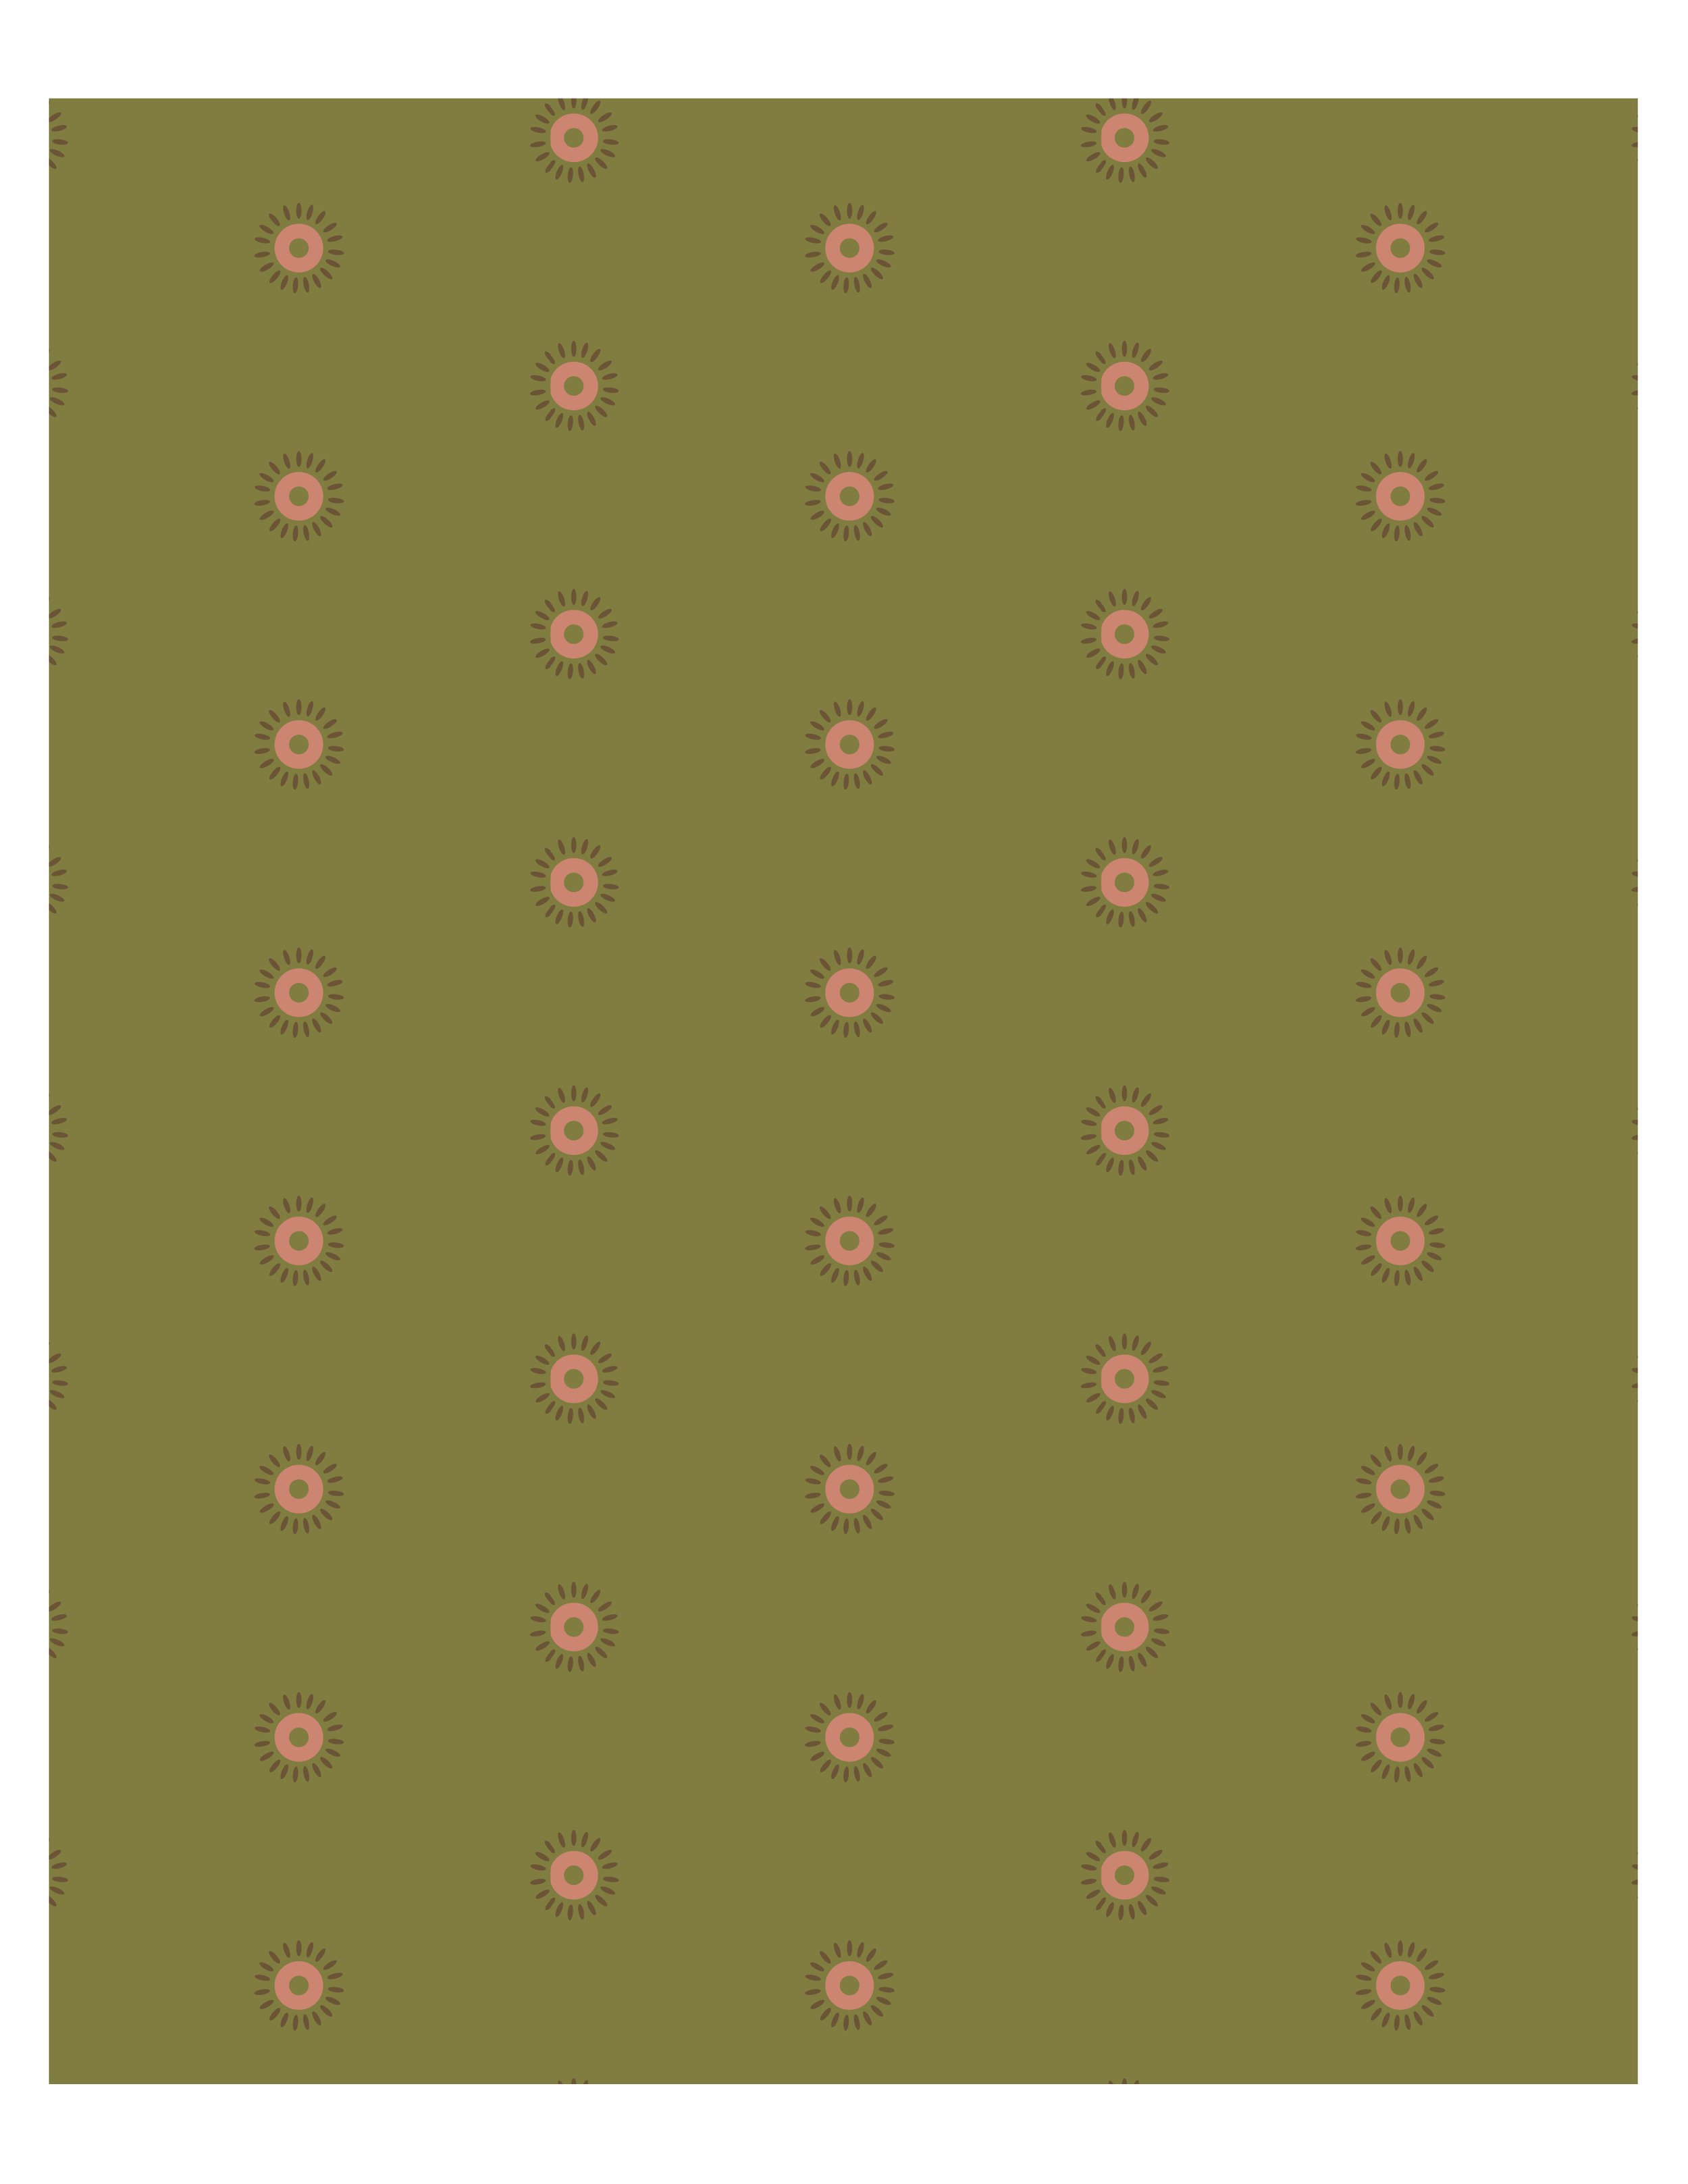 Round Floret on Olive Pattern Print-01.jpg